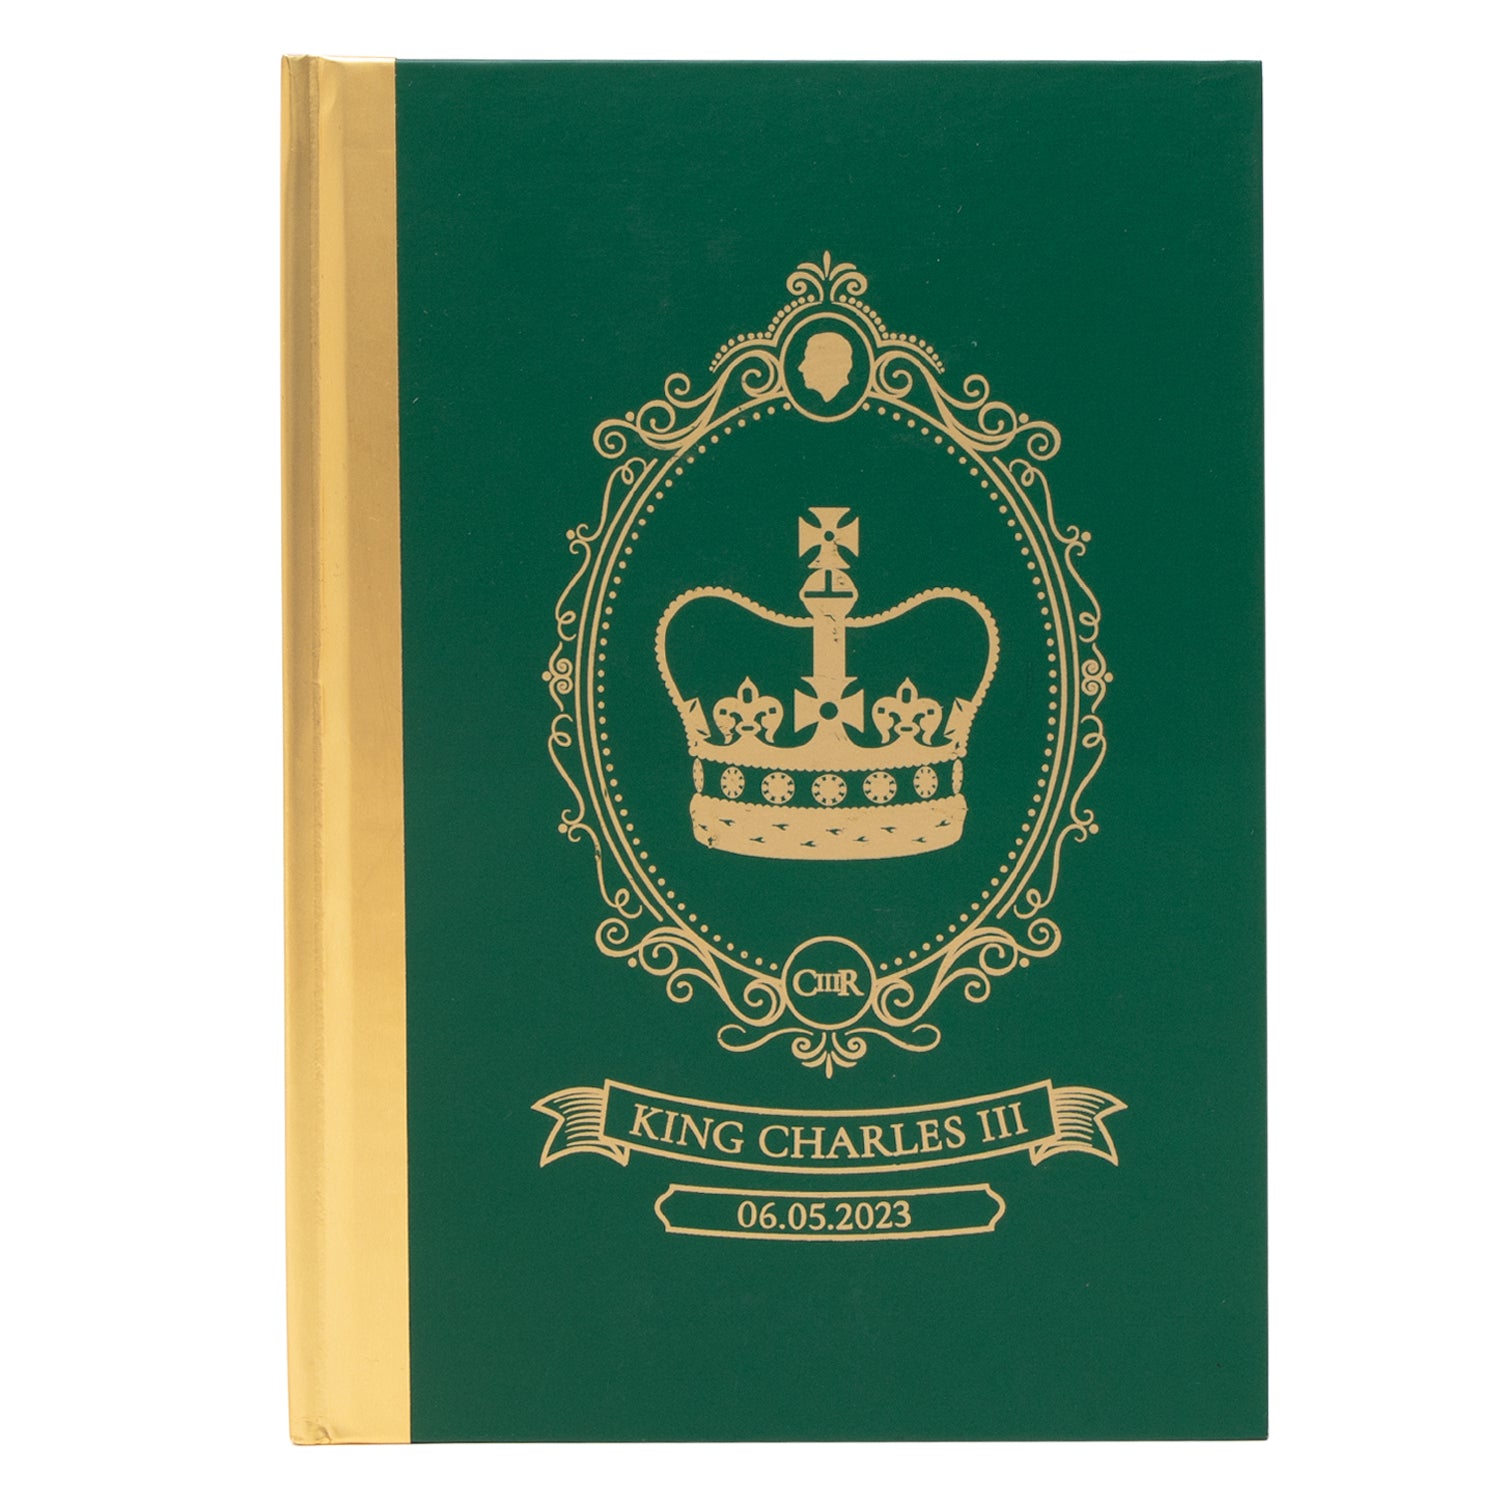 King Charles III Coronation A5 Notebook - Green/Gold